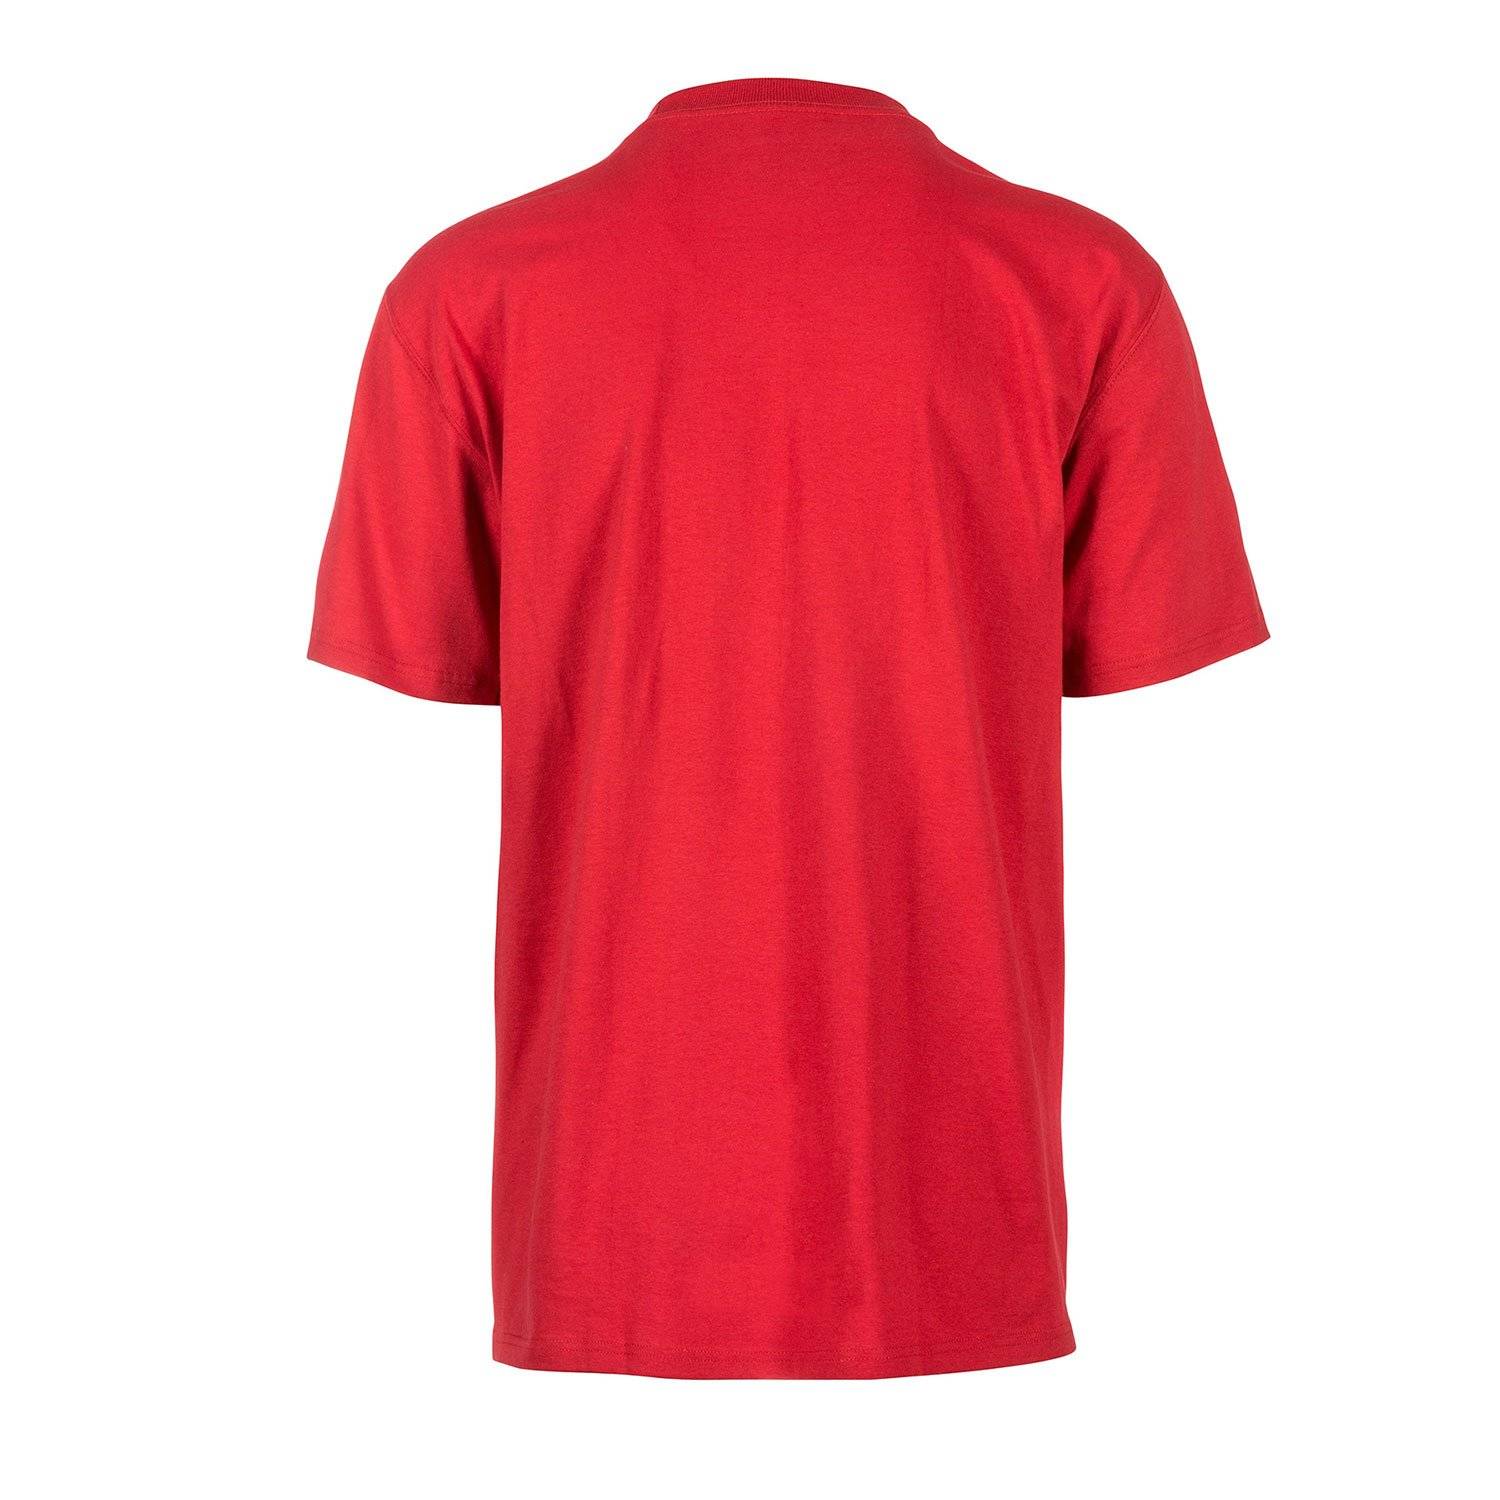 5.11 Tactical Short Sleeve Station Wear T-Shirt